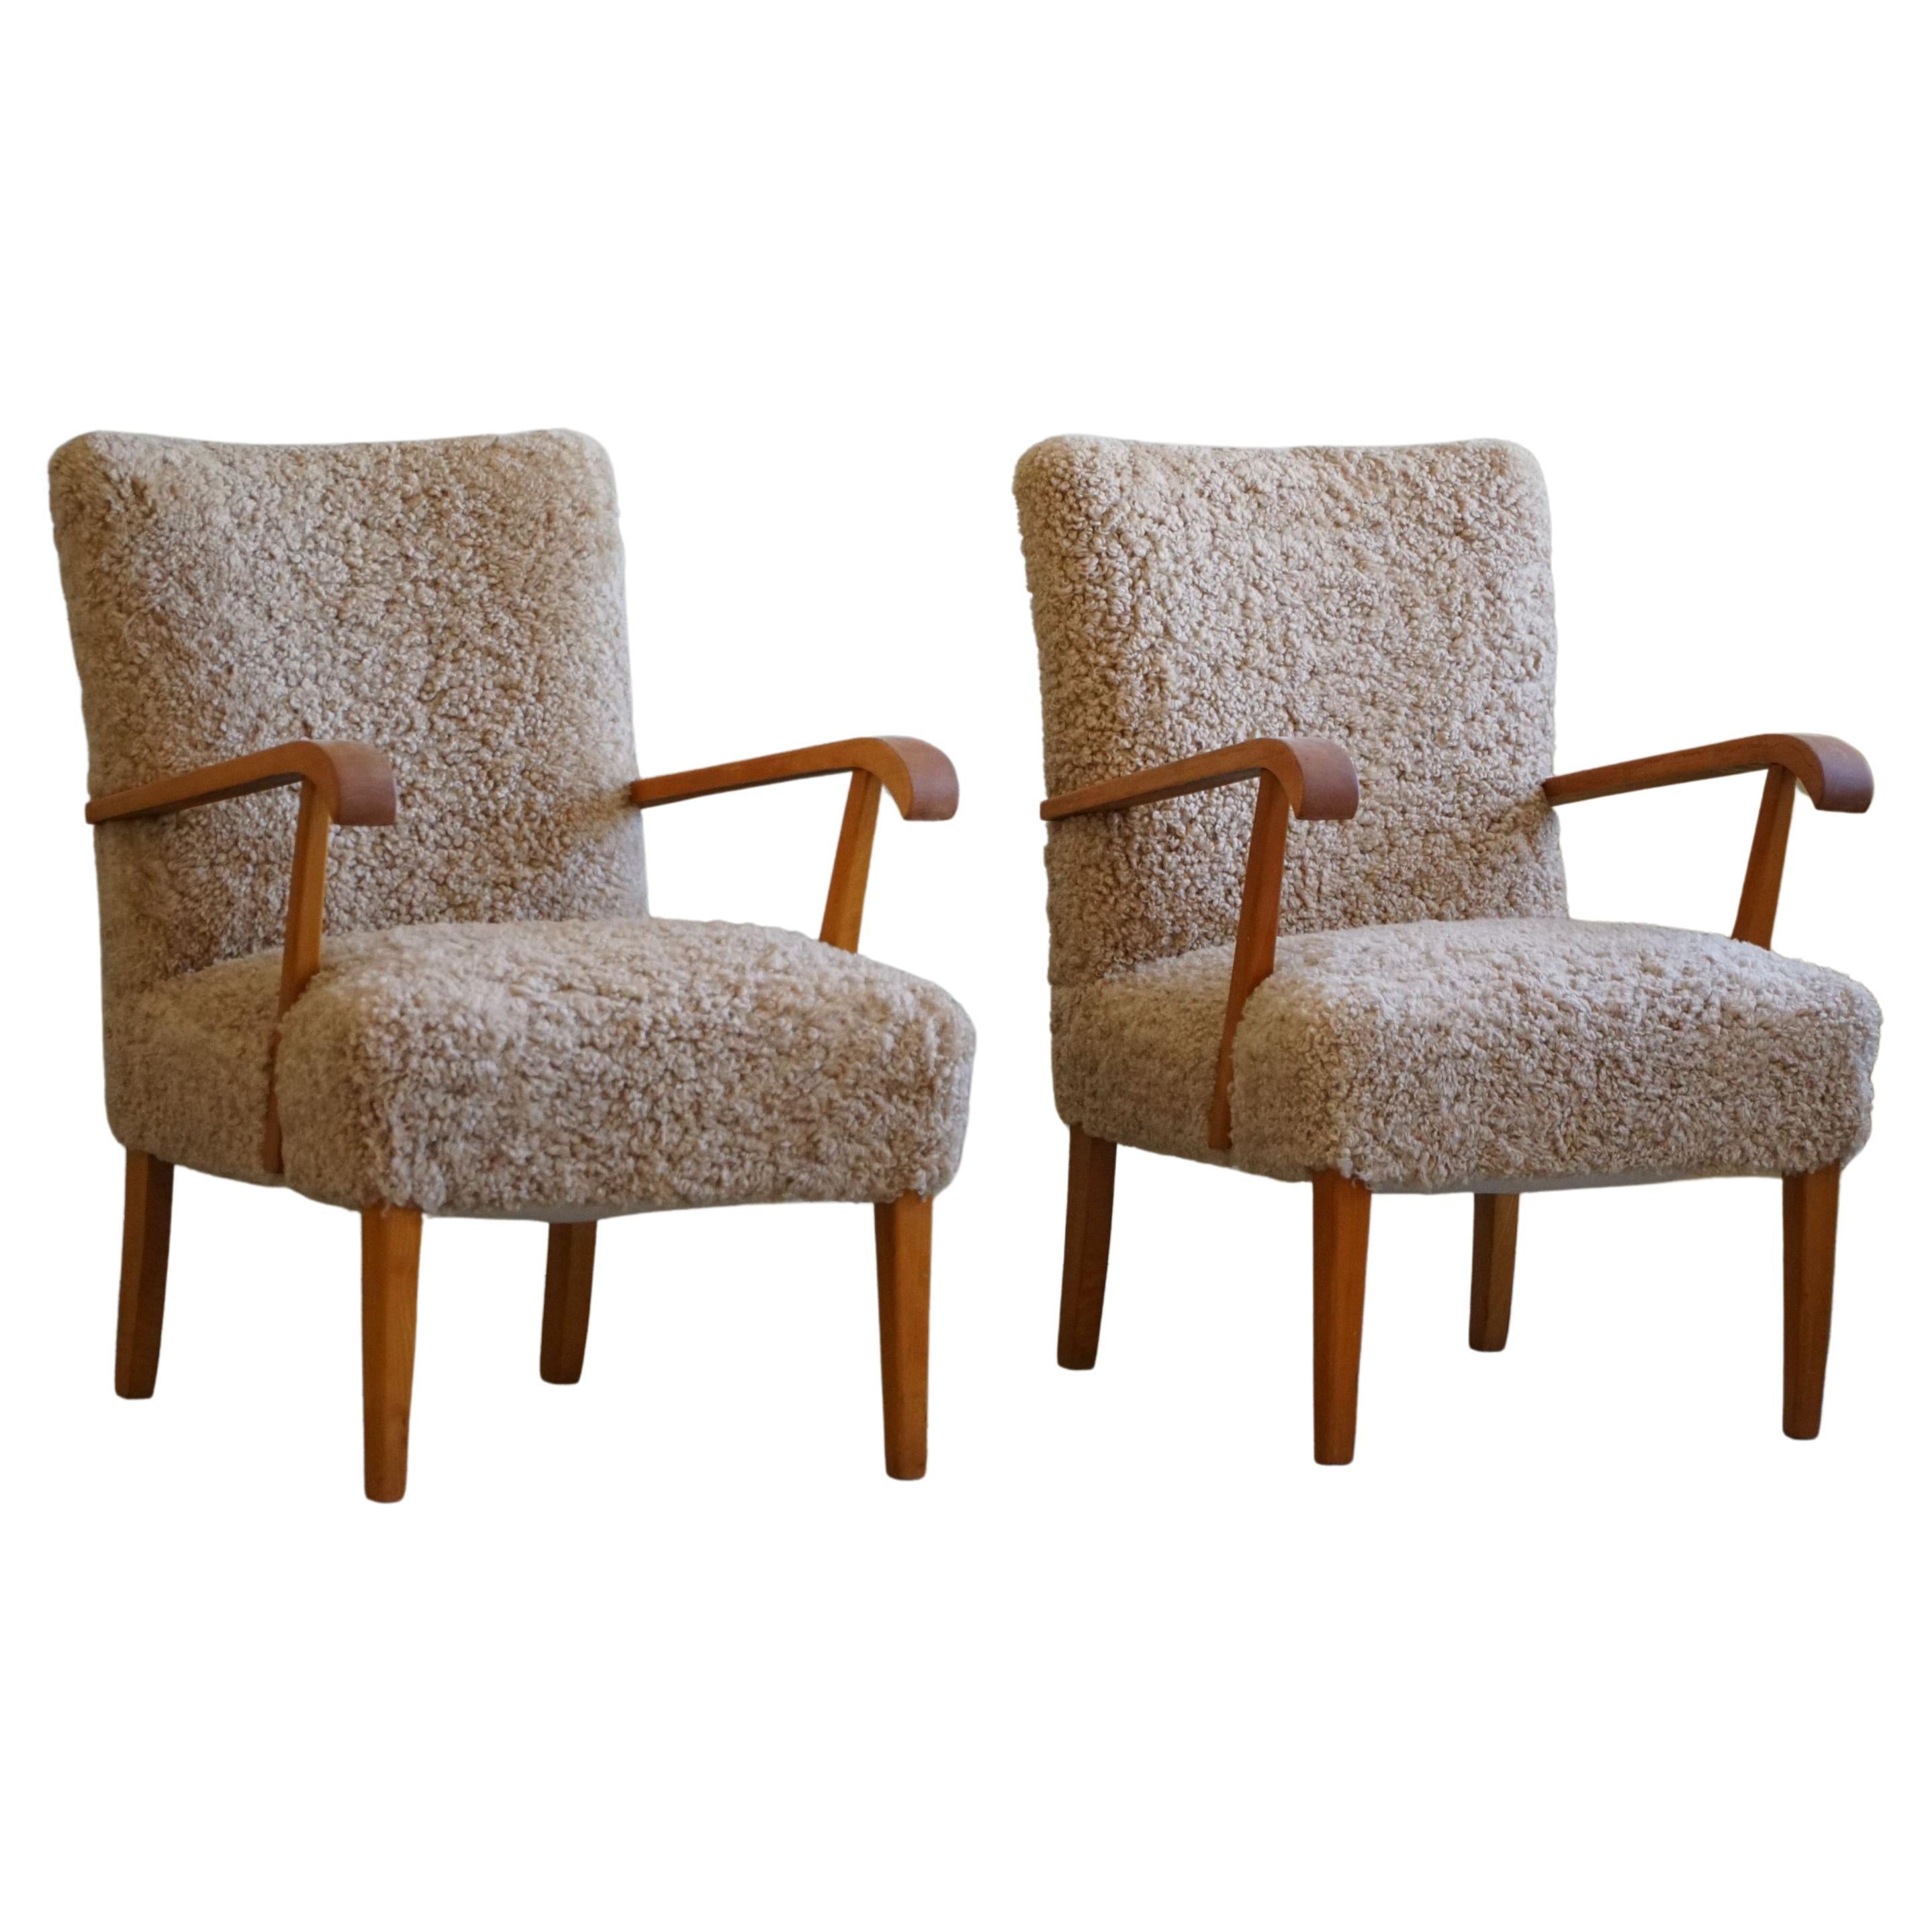 Pair of Danish Mid Century Modern Lounge Chairs in Beech & Lambswool, 1960s